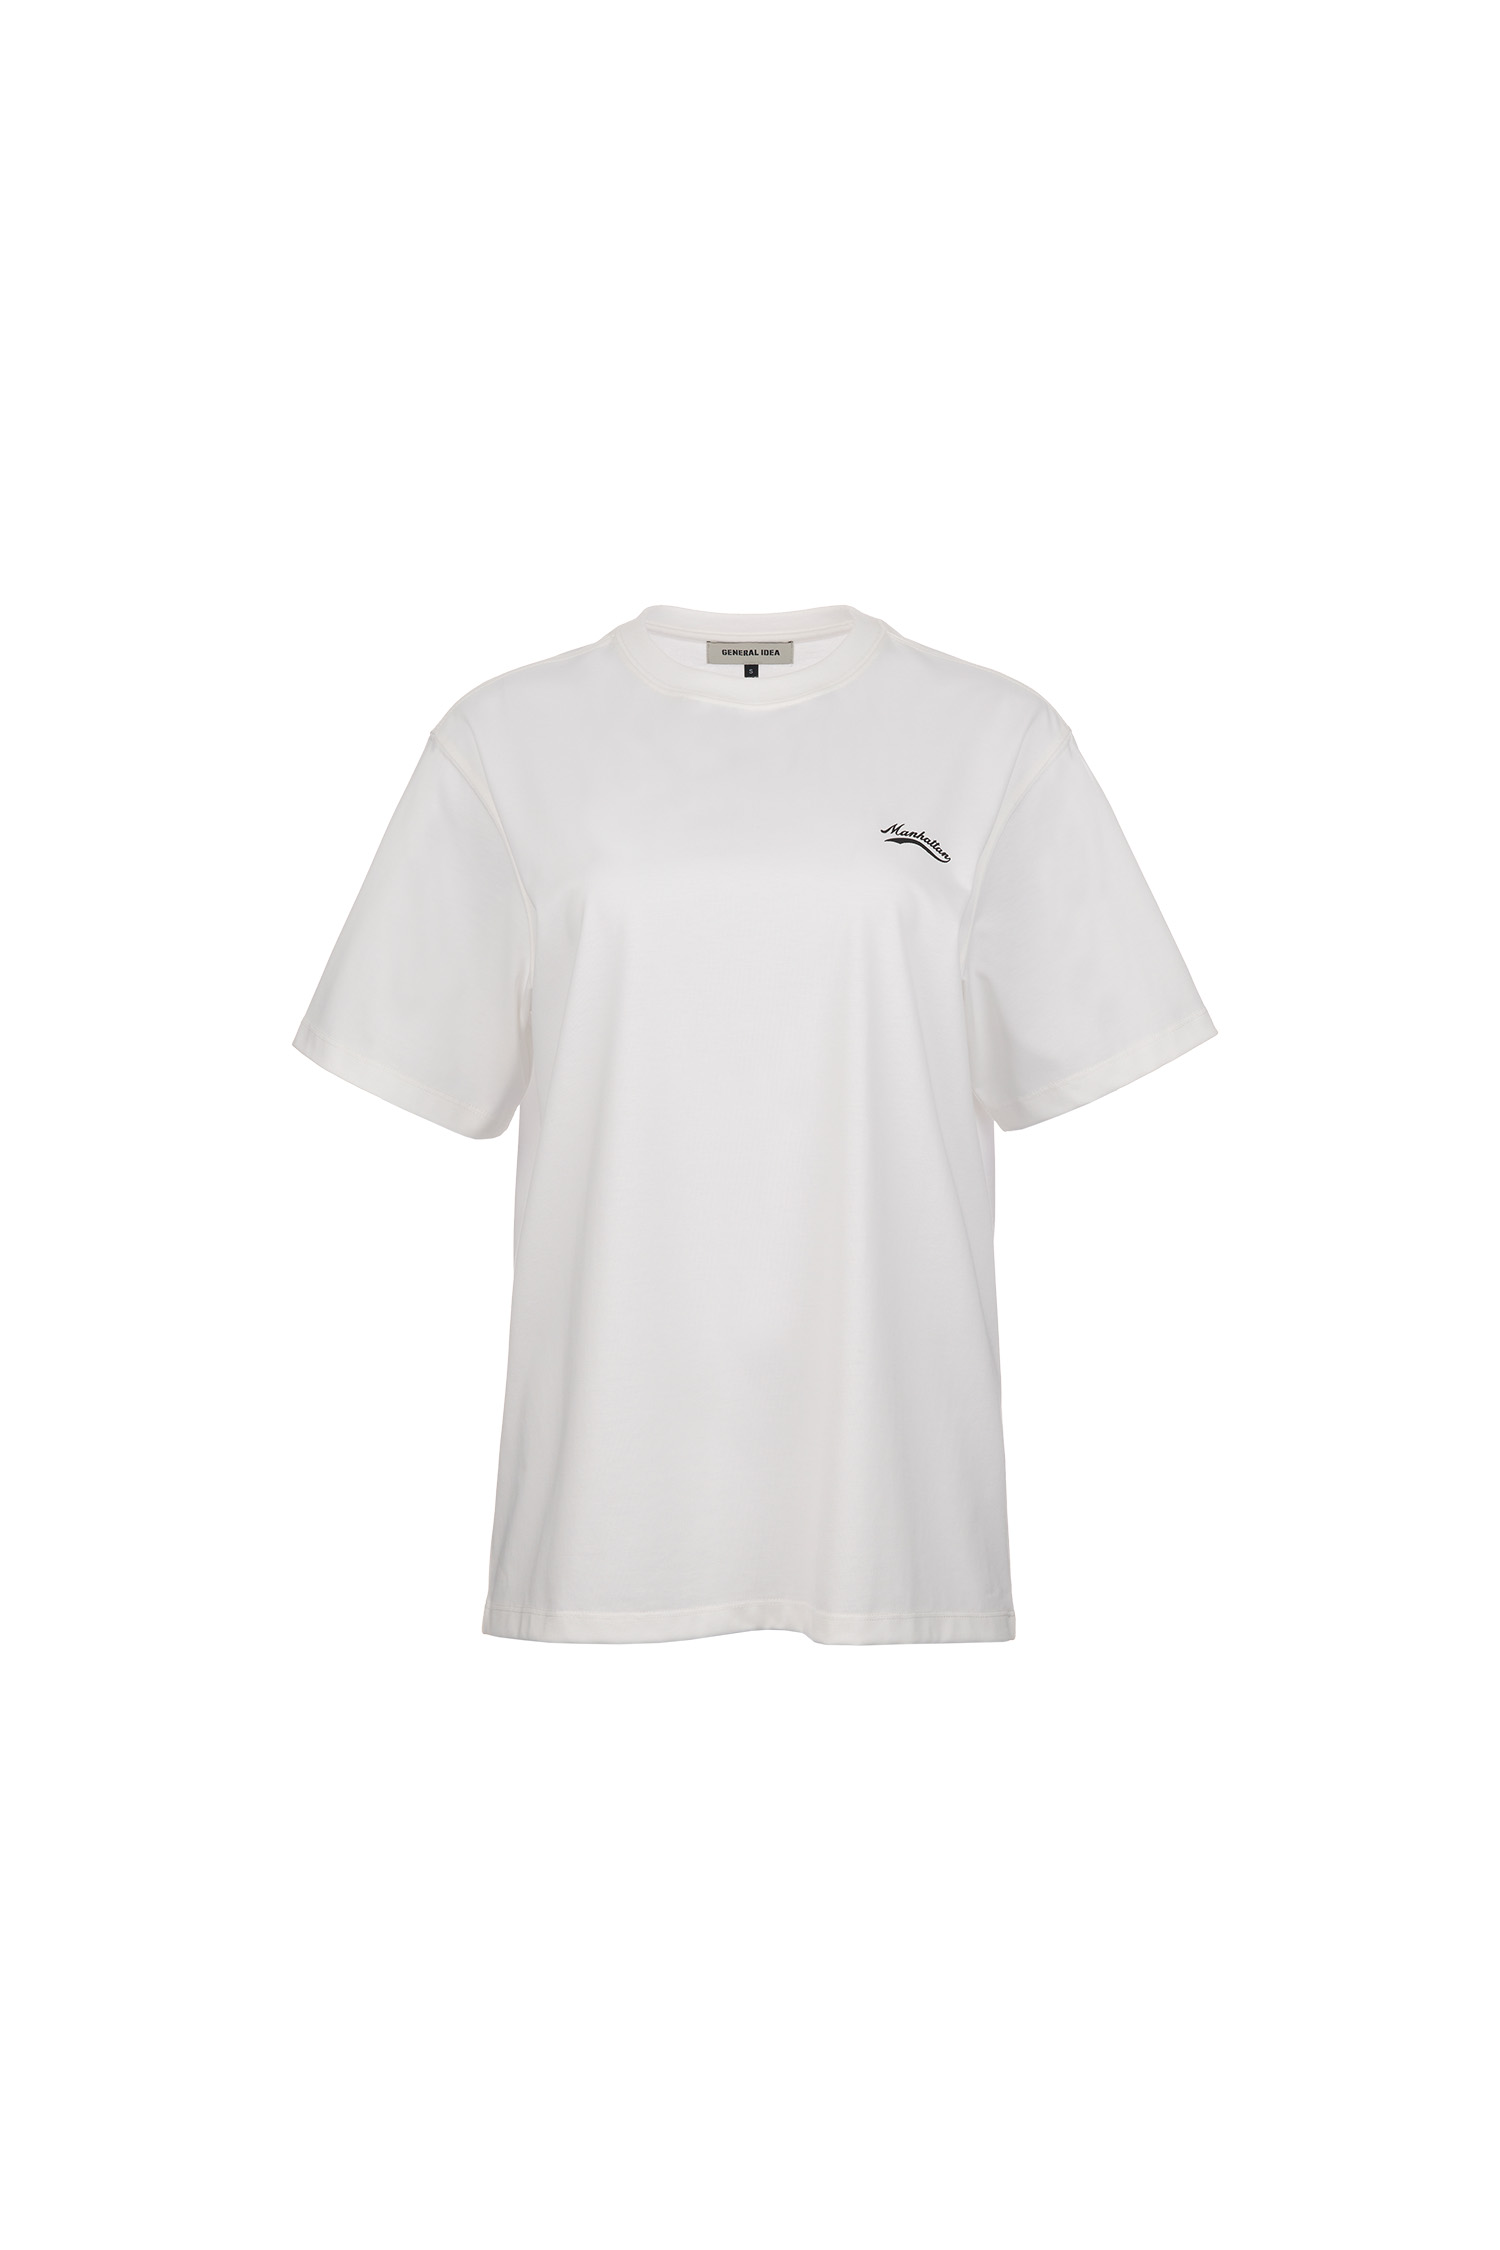 UNISEX 맨하탄 반팔 티셔츠 [WHITE]